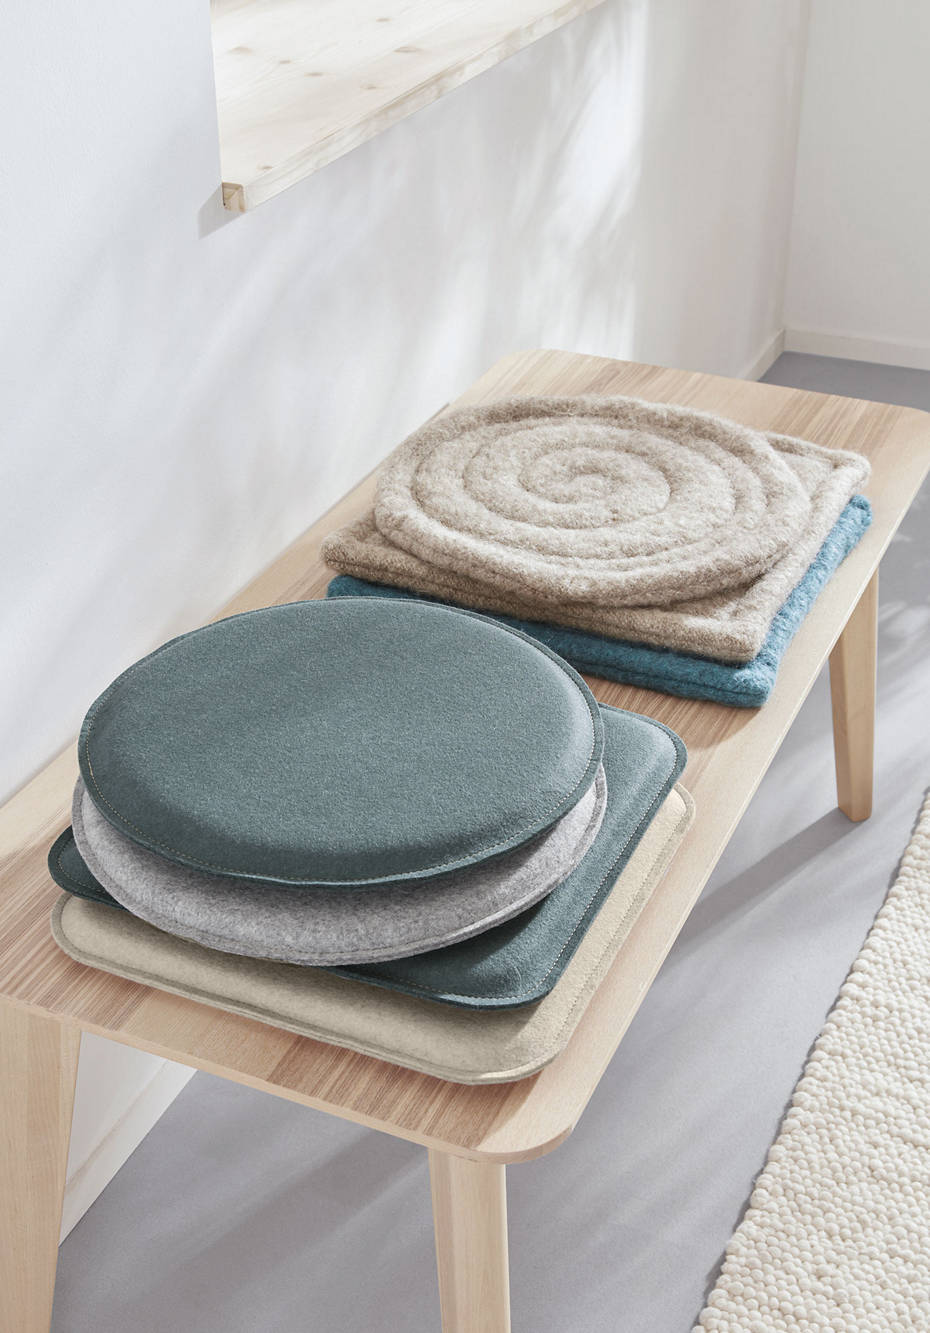 Round felt cushions made of virgin wool